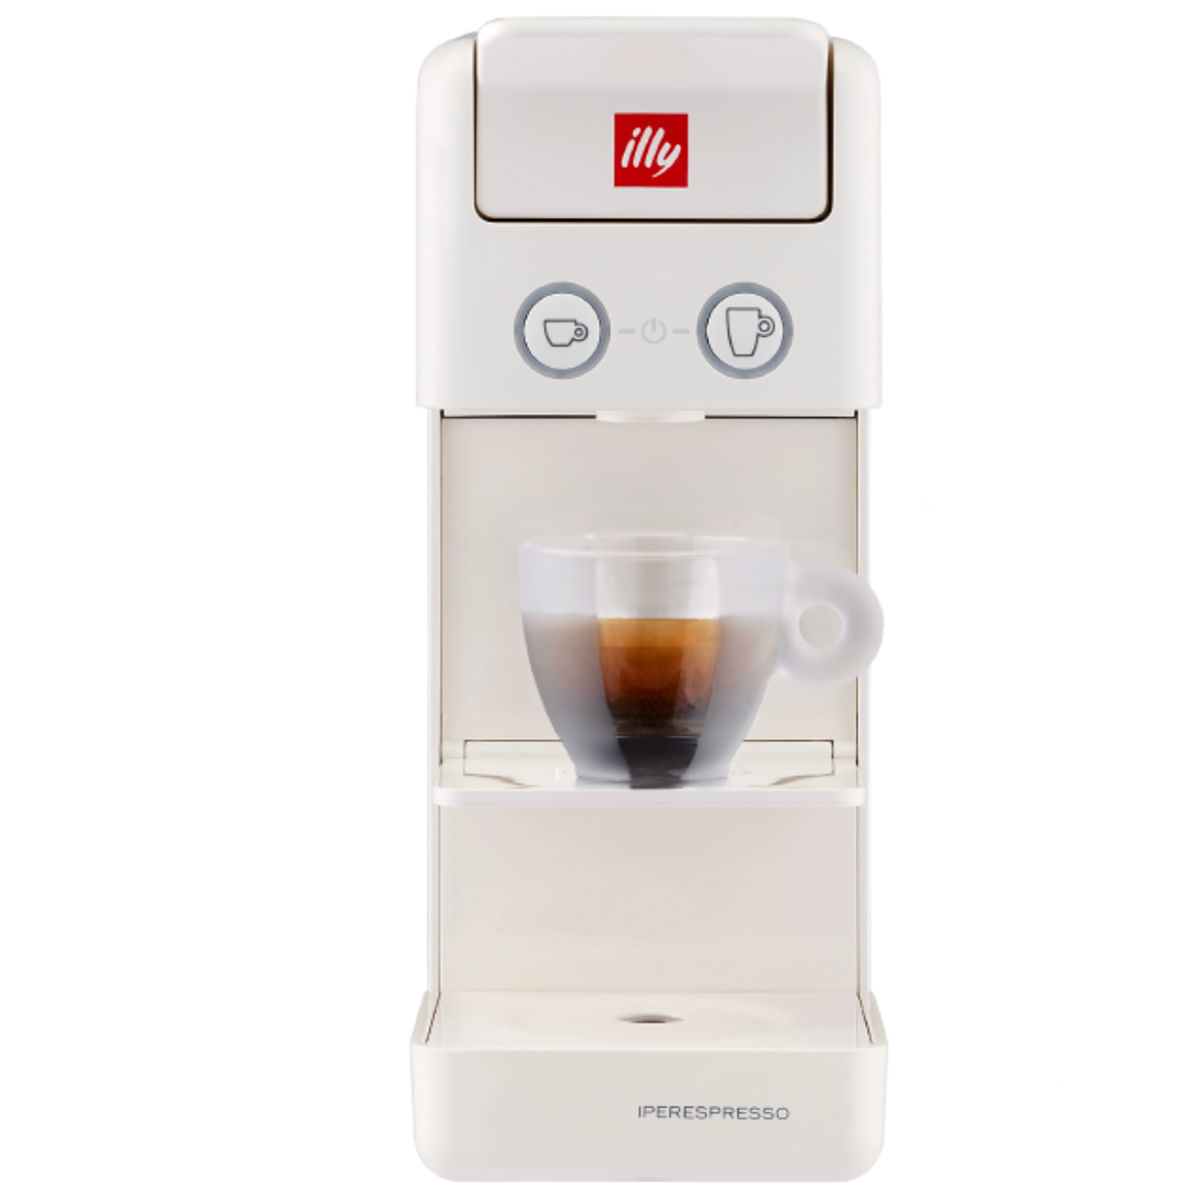 Illycaffe' s.p.a bustina decalcificante per macchine da caffè espresso